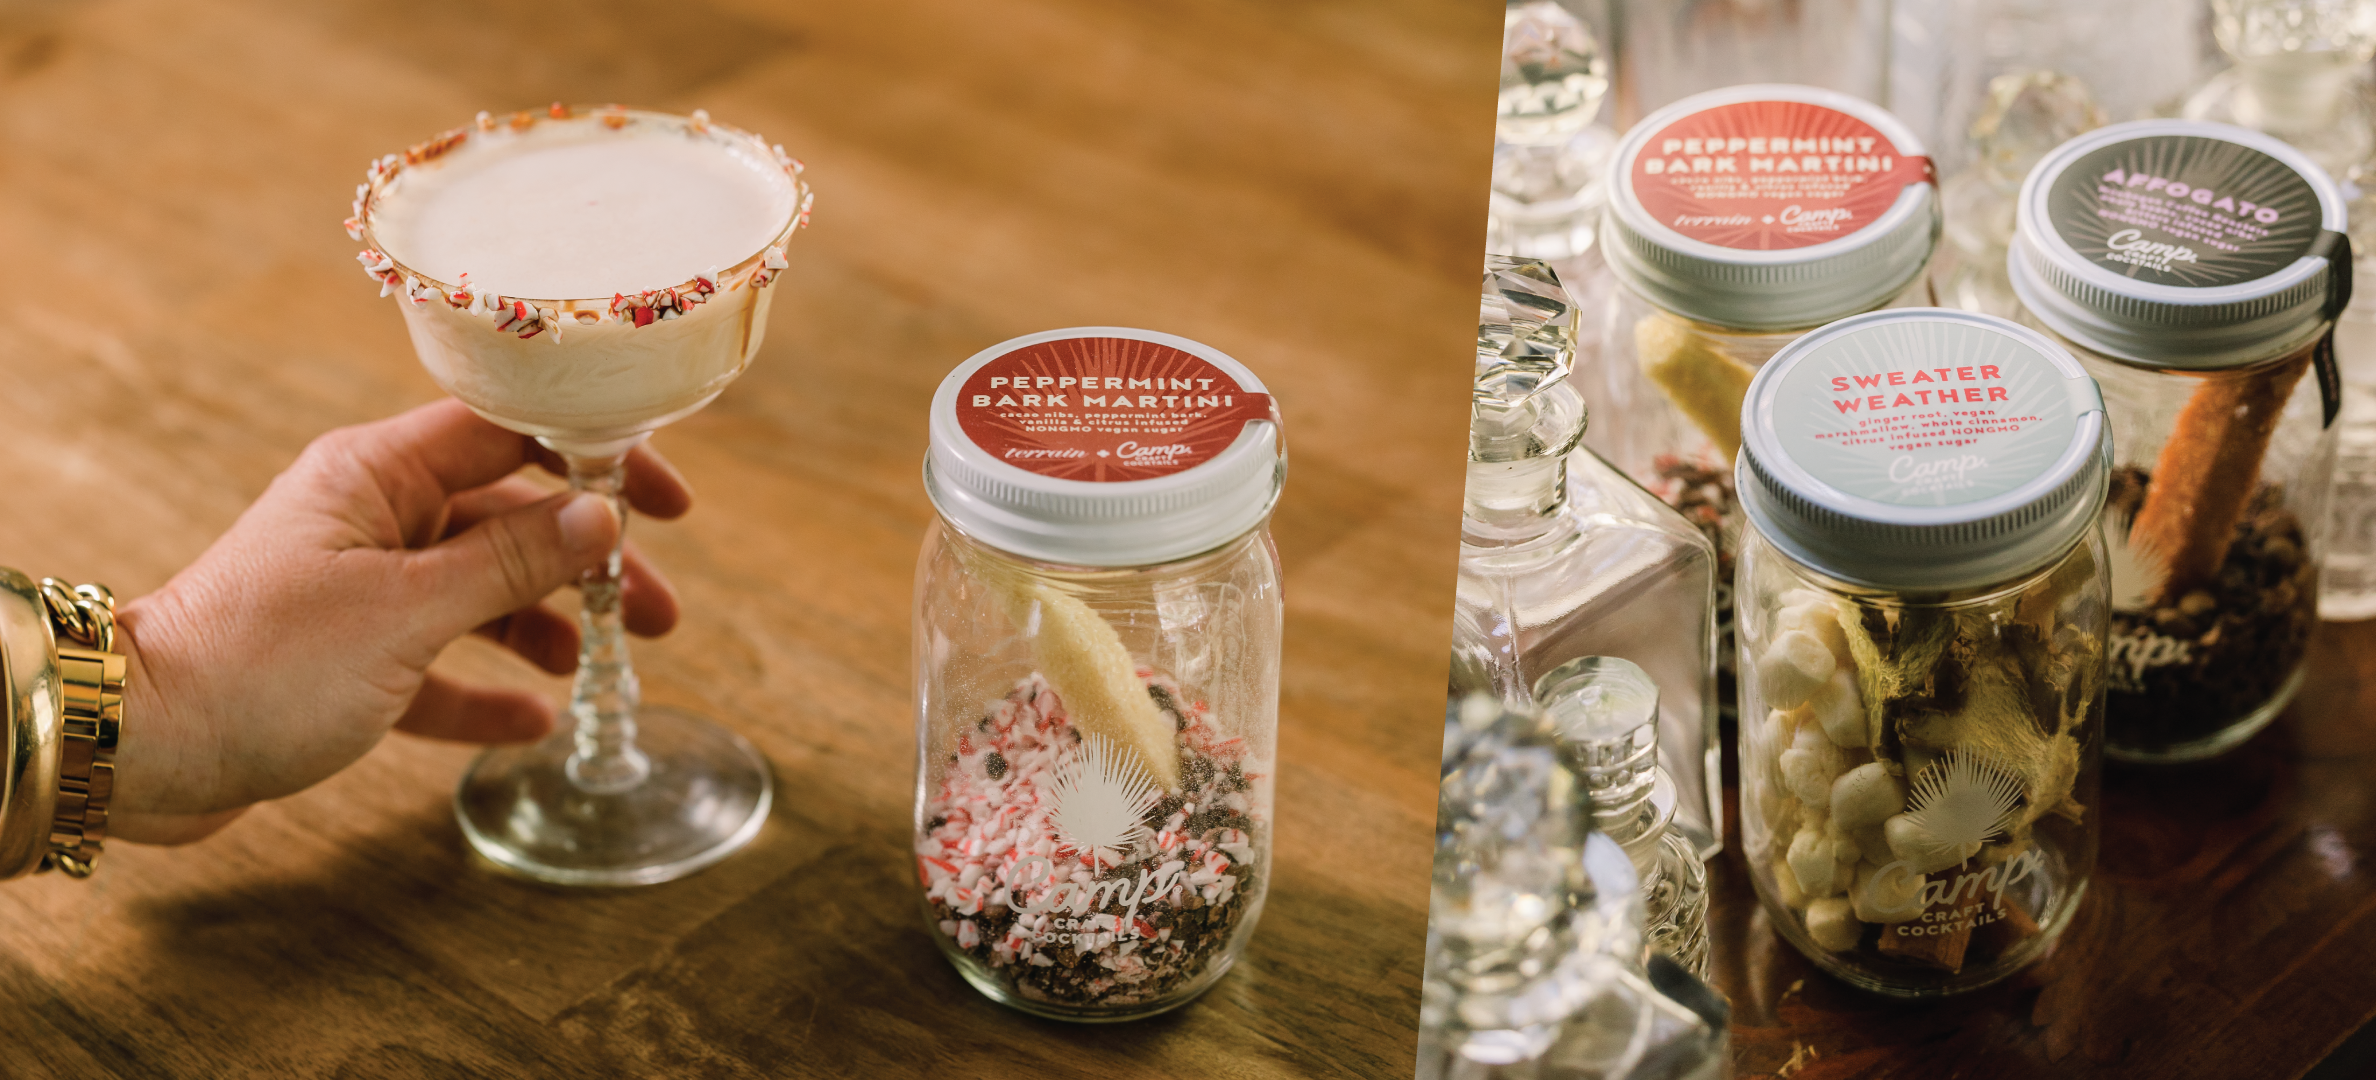 Limited Edition Cocktail Jar Set